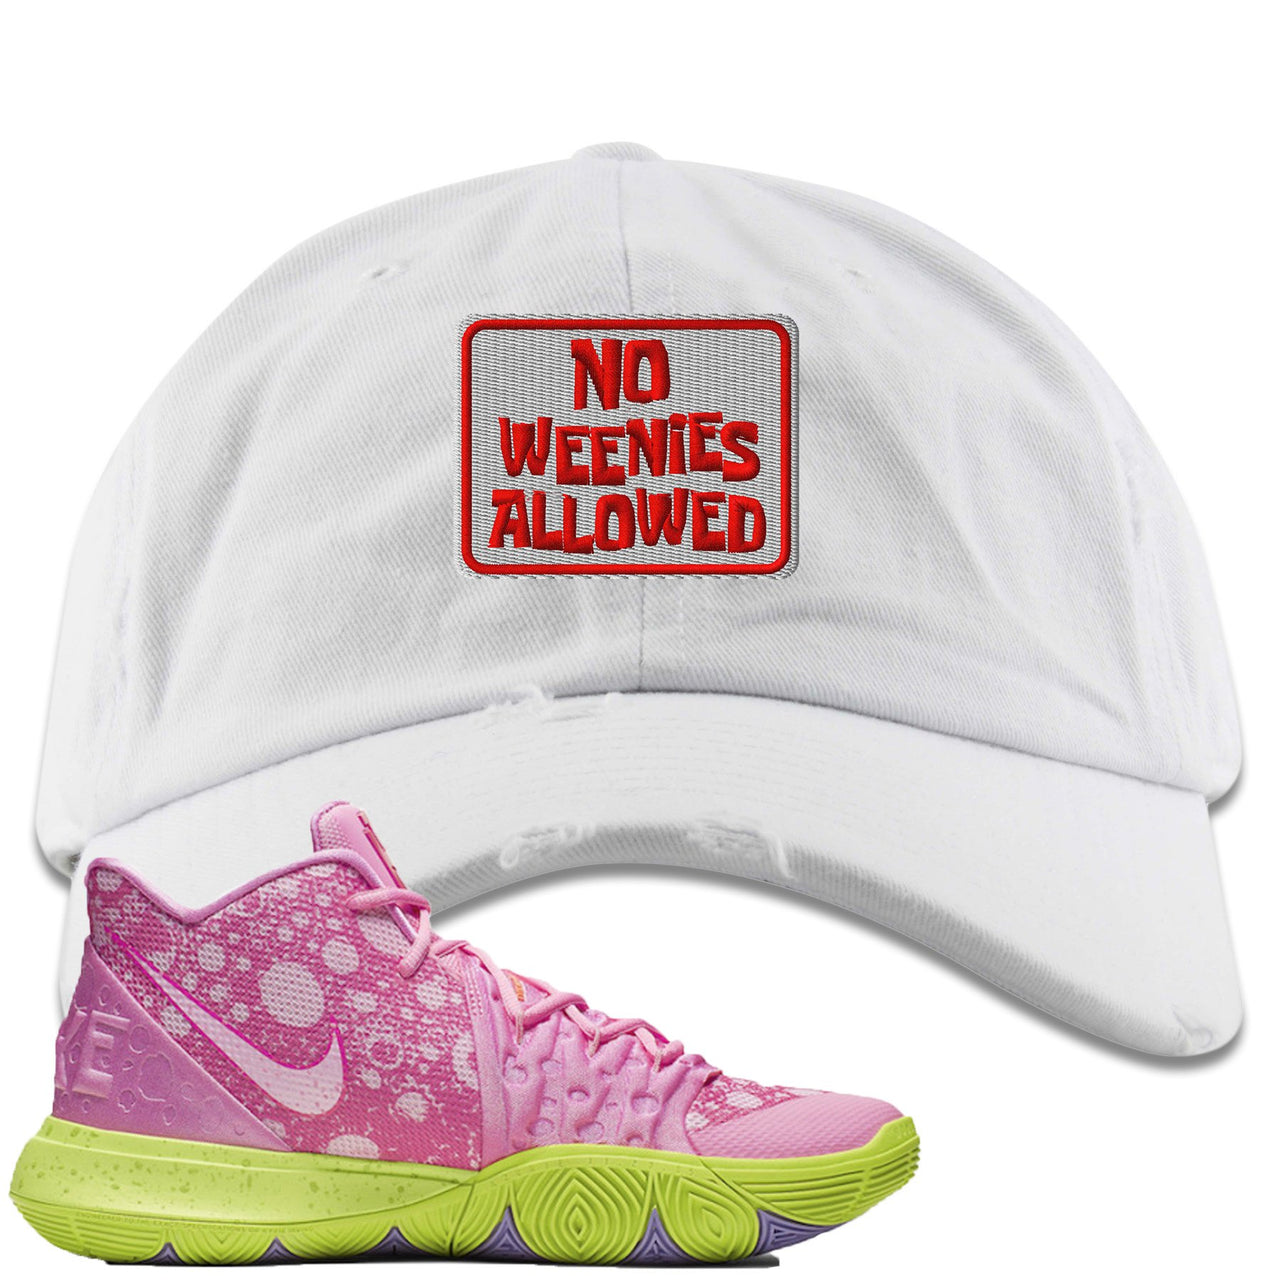 Patrick K5s Distressed Dad Hat | No Weenies Allowed, White